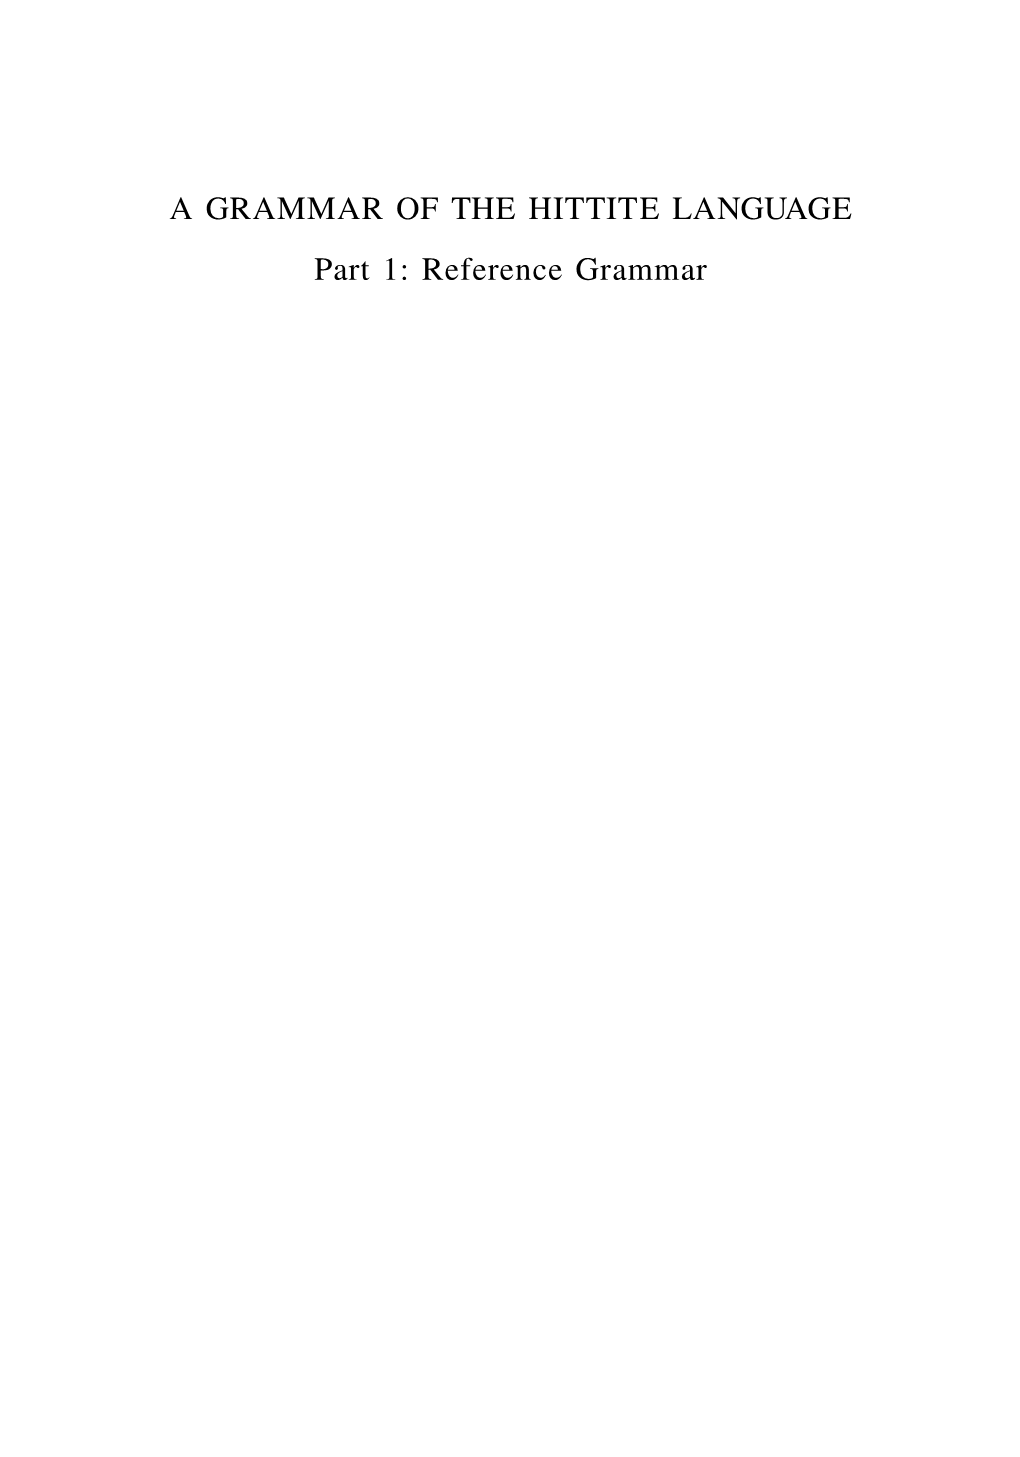 A GRAMMAR of the HITTITE LANGUAGE Part 1: Reference Grammar